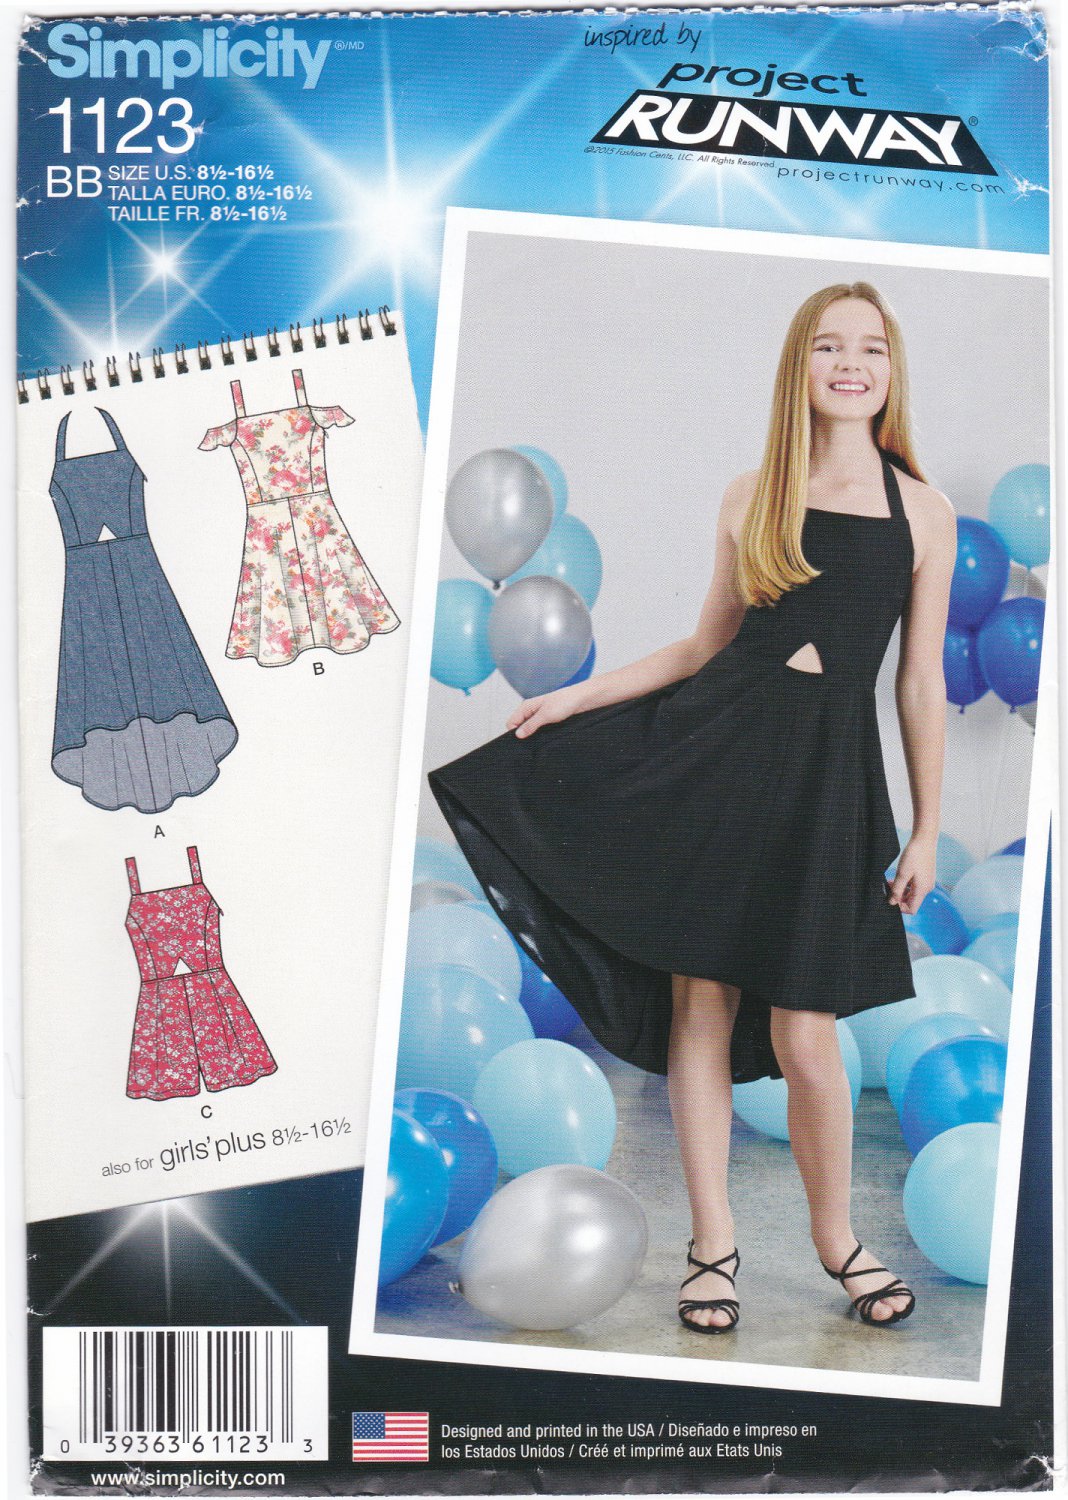 Simplicity 1123 Girls Teens Sewing Pattern Project Runway Dress Romper Kids Sizes 8 1/2-16 1/2